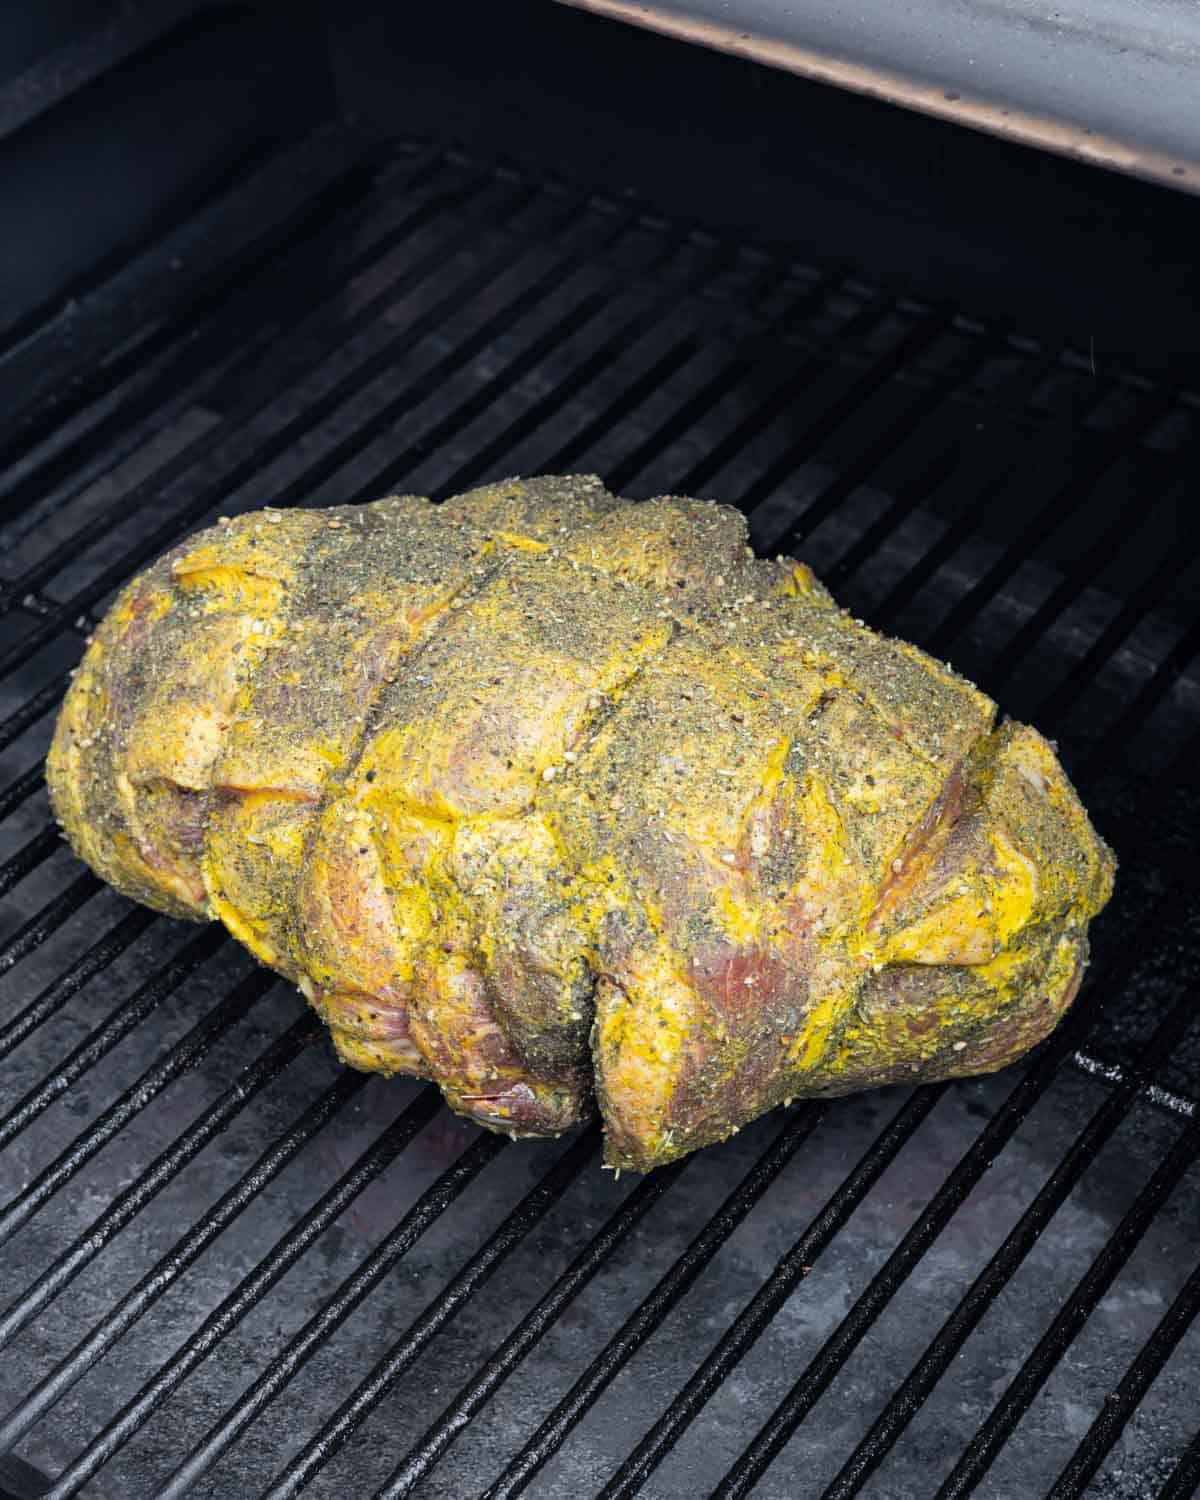 Lamb leg roast set onto smoker grill grates at start of smoking process.